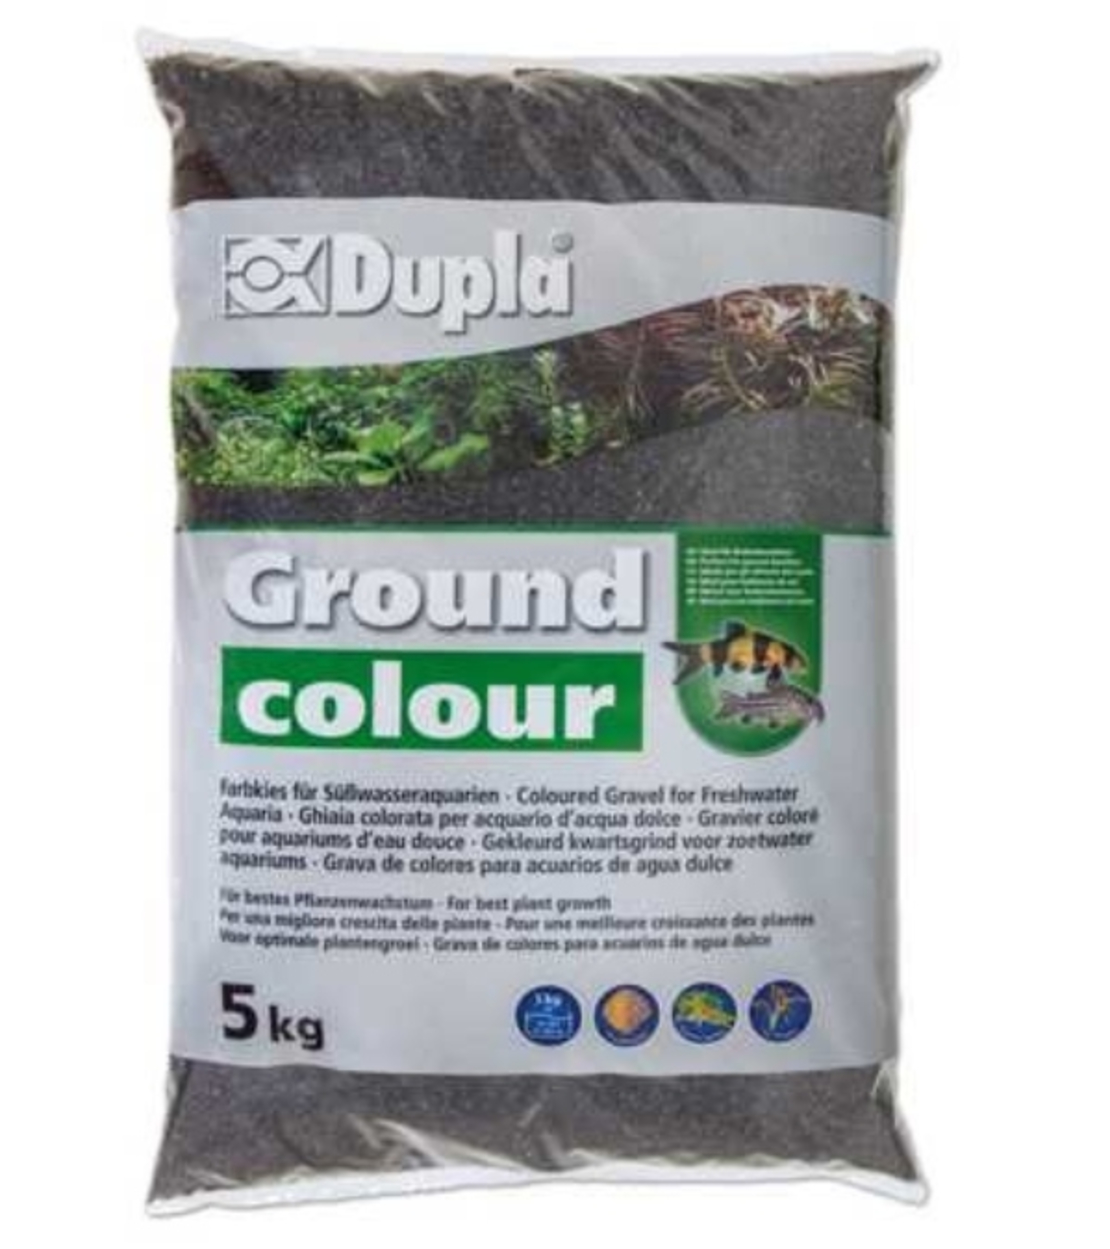 Dupla Ground colour Black Star 5KG | חצץ בצבע שחור